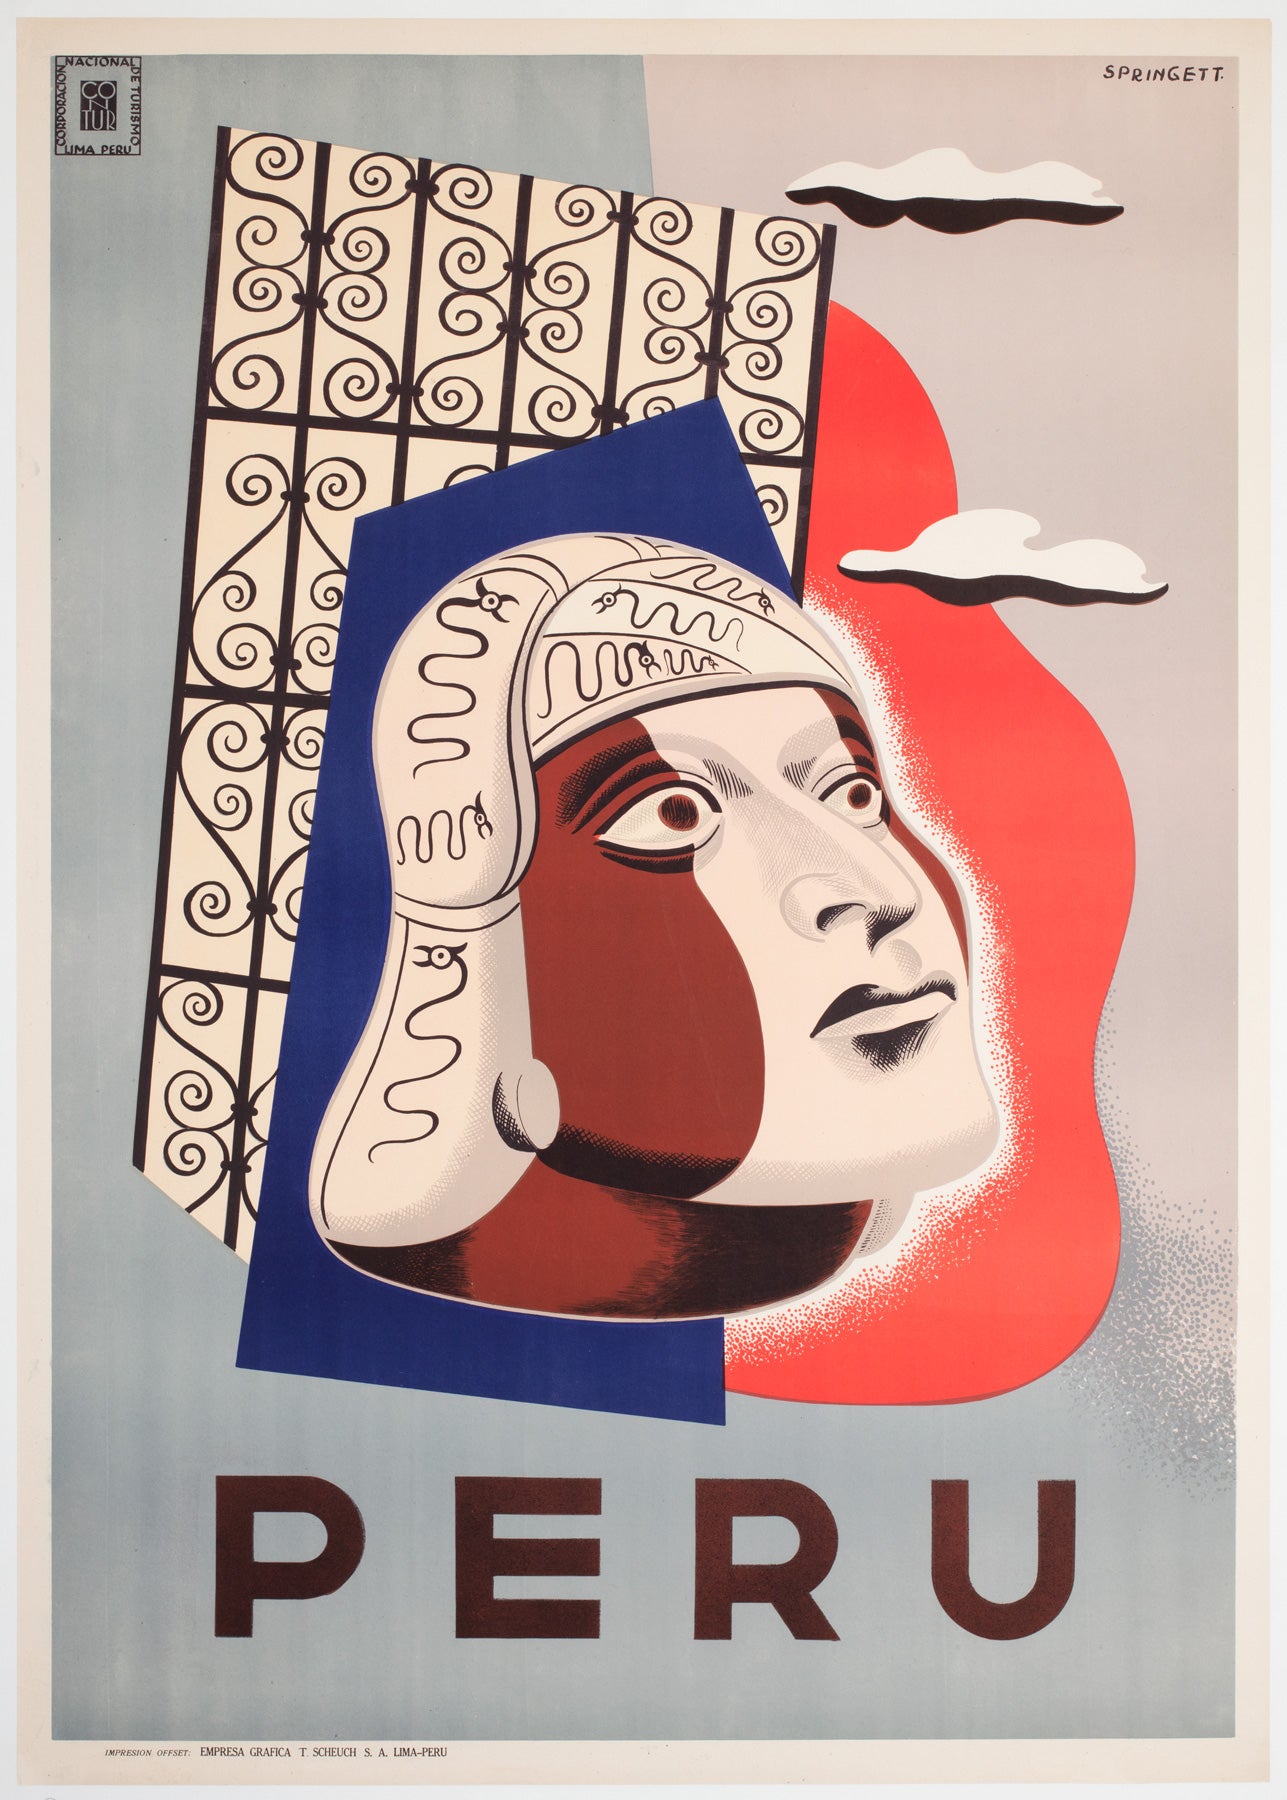 Peru c1950s Travel Advertising Poster, Sabino Springett